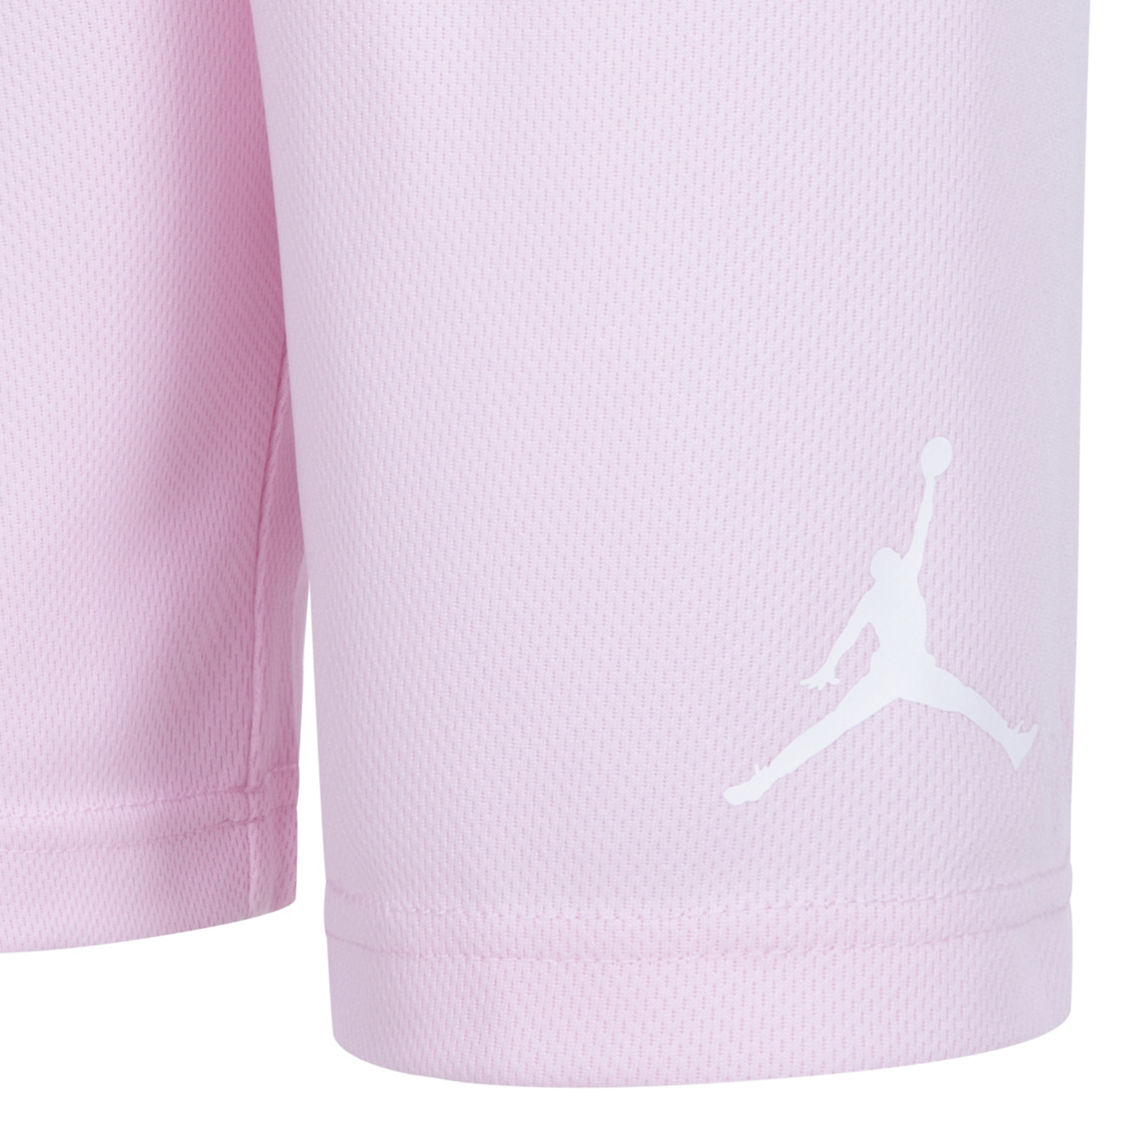 Jordan Little Girls Jordan 23 Jersey Top and Mesh Shorts 2 pc. Set - Image 6 of 6